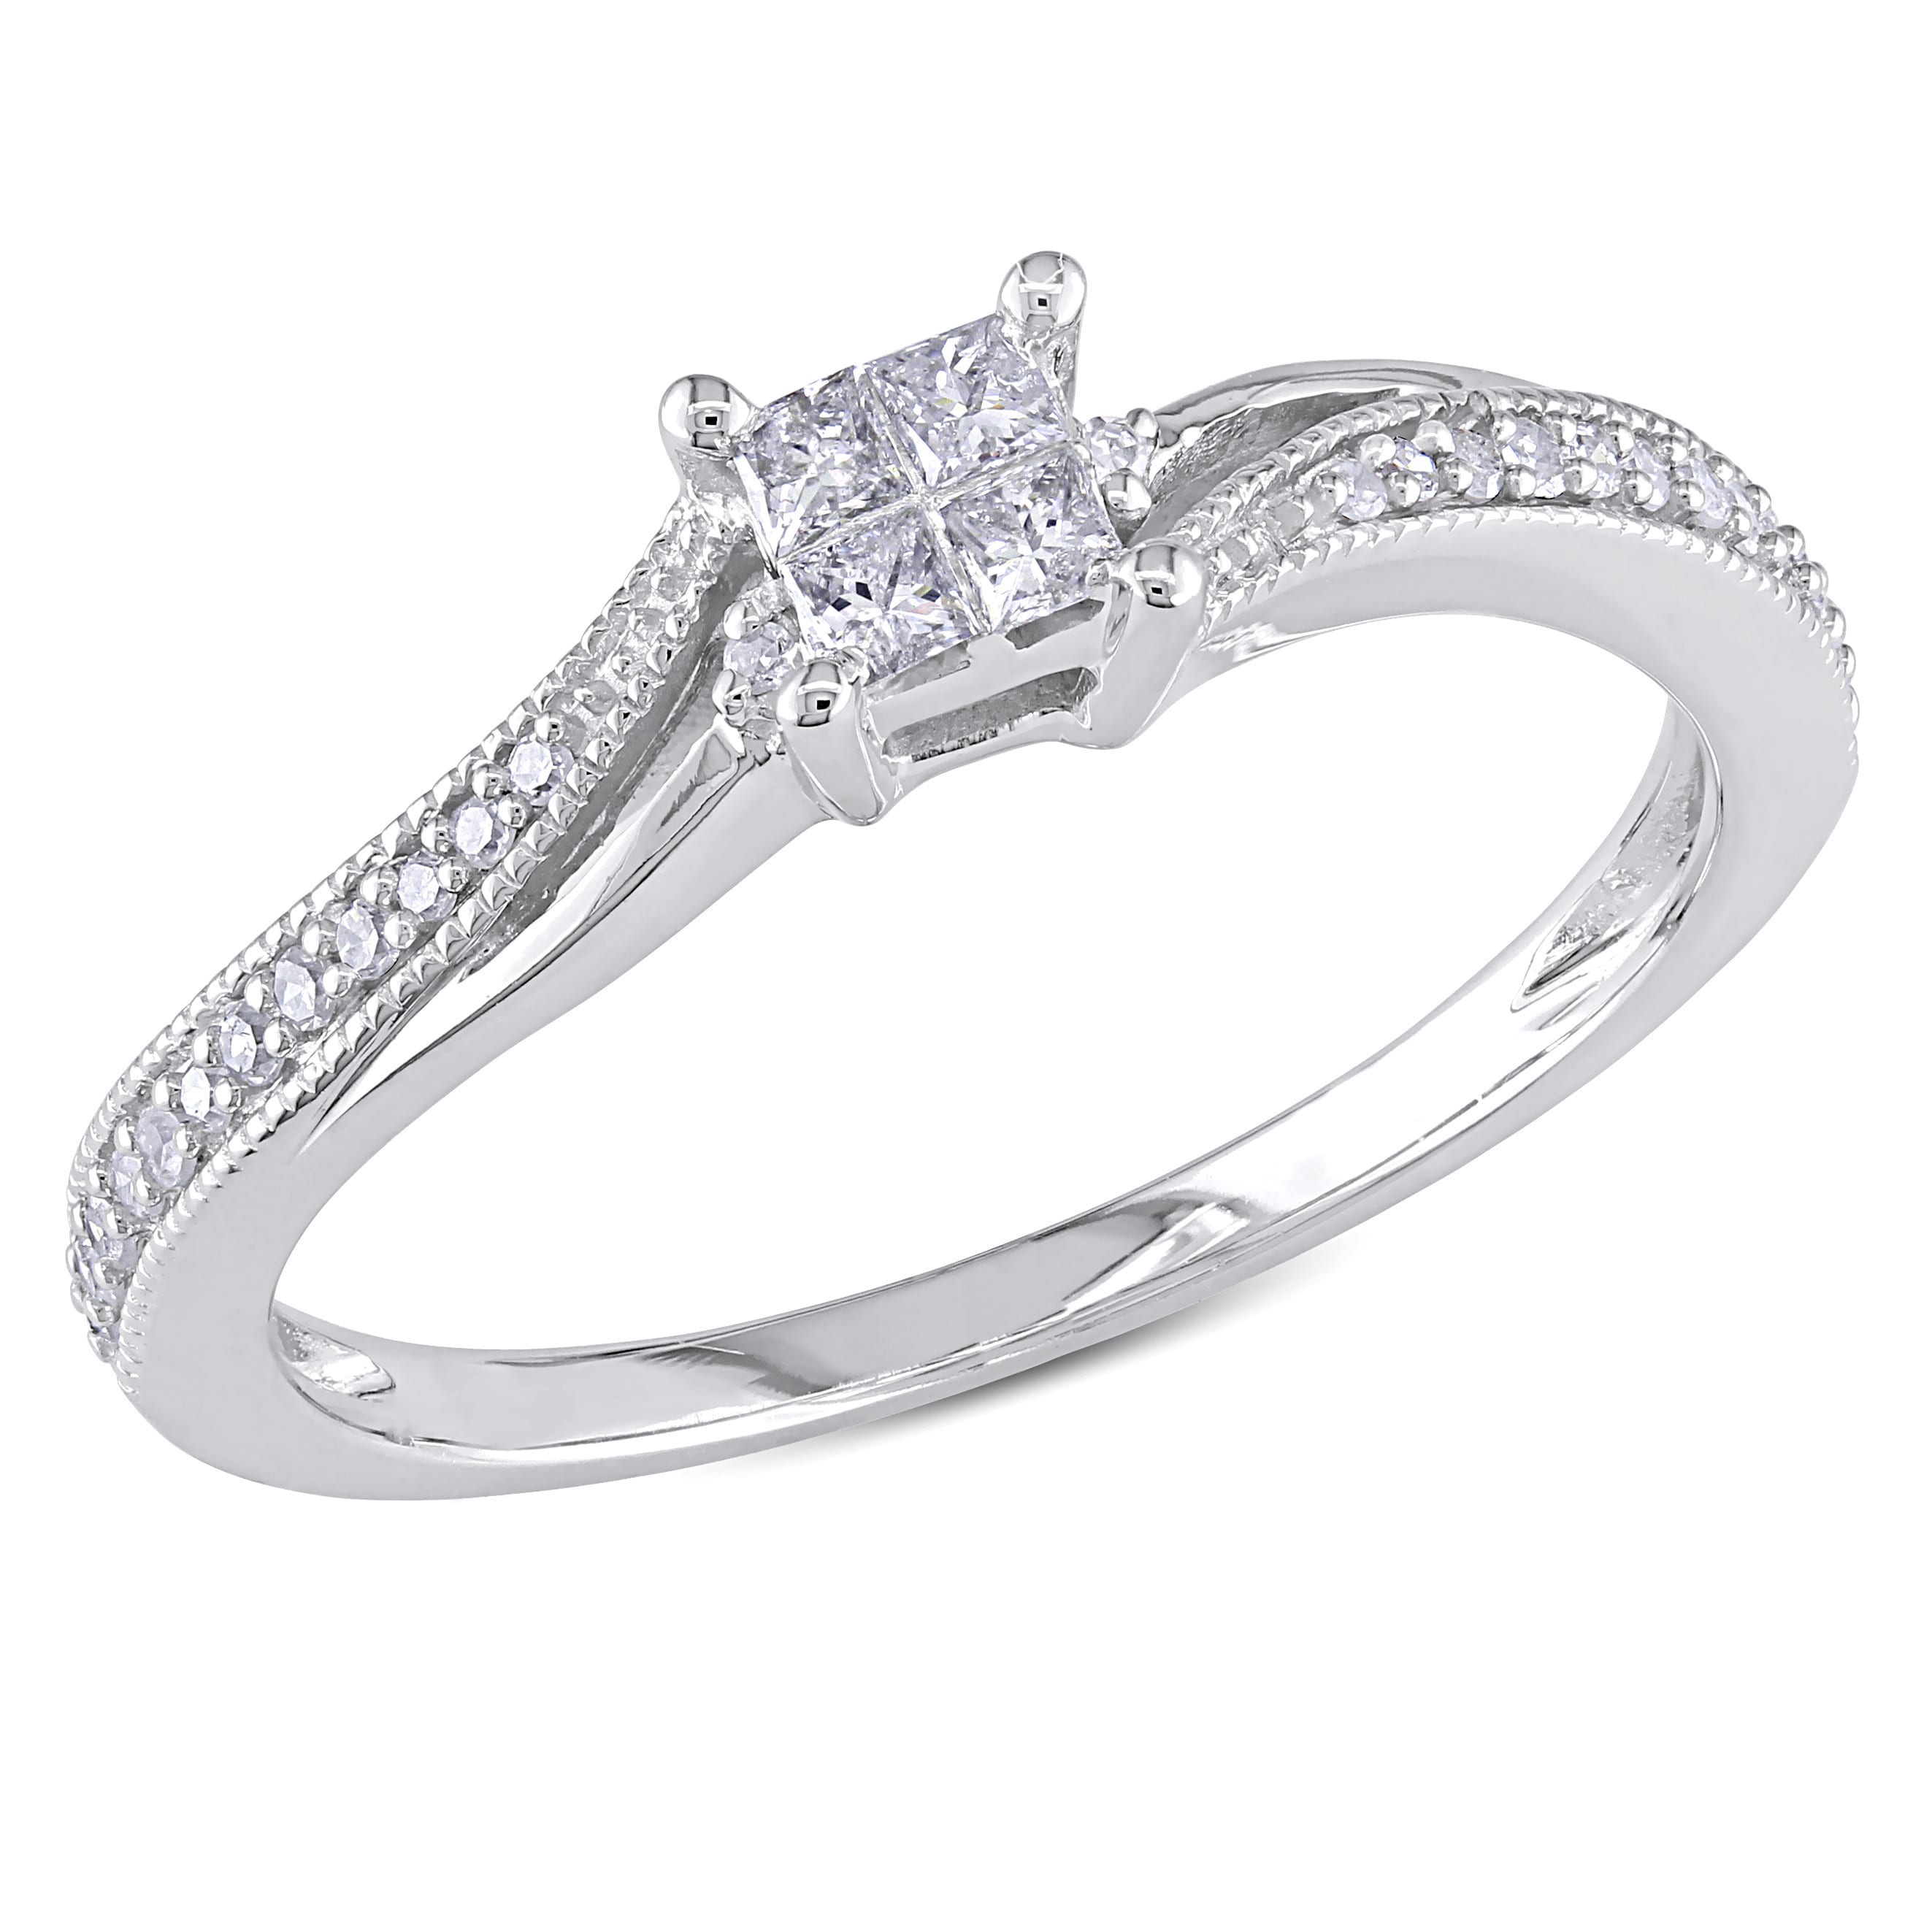 10k white gold 1 5ct tdw diamond ring msrp $ 799 20 sale $ 305 99 off